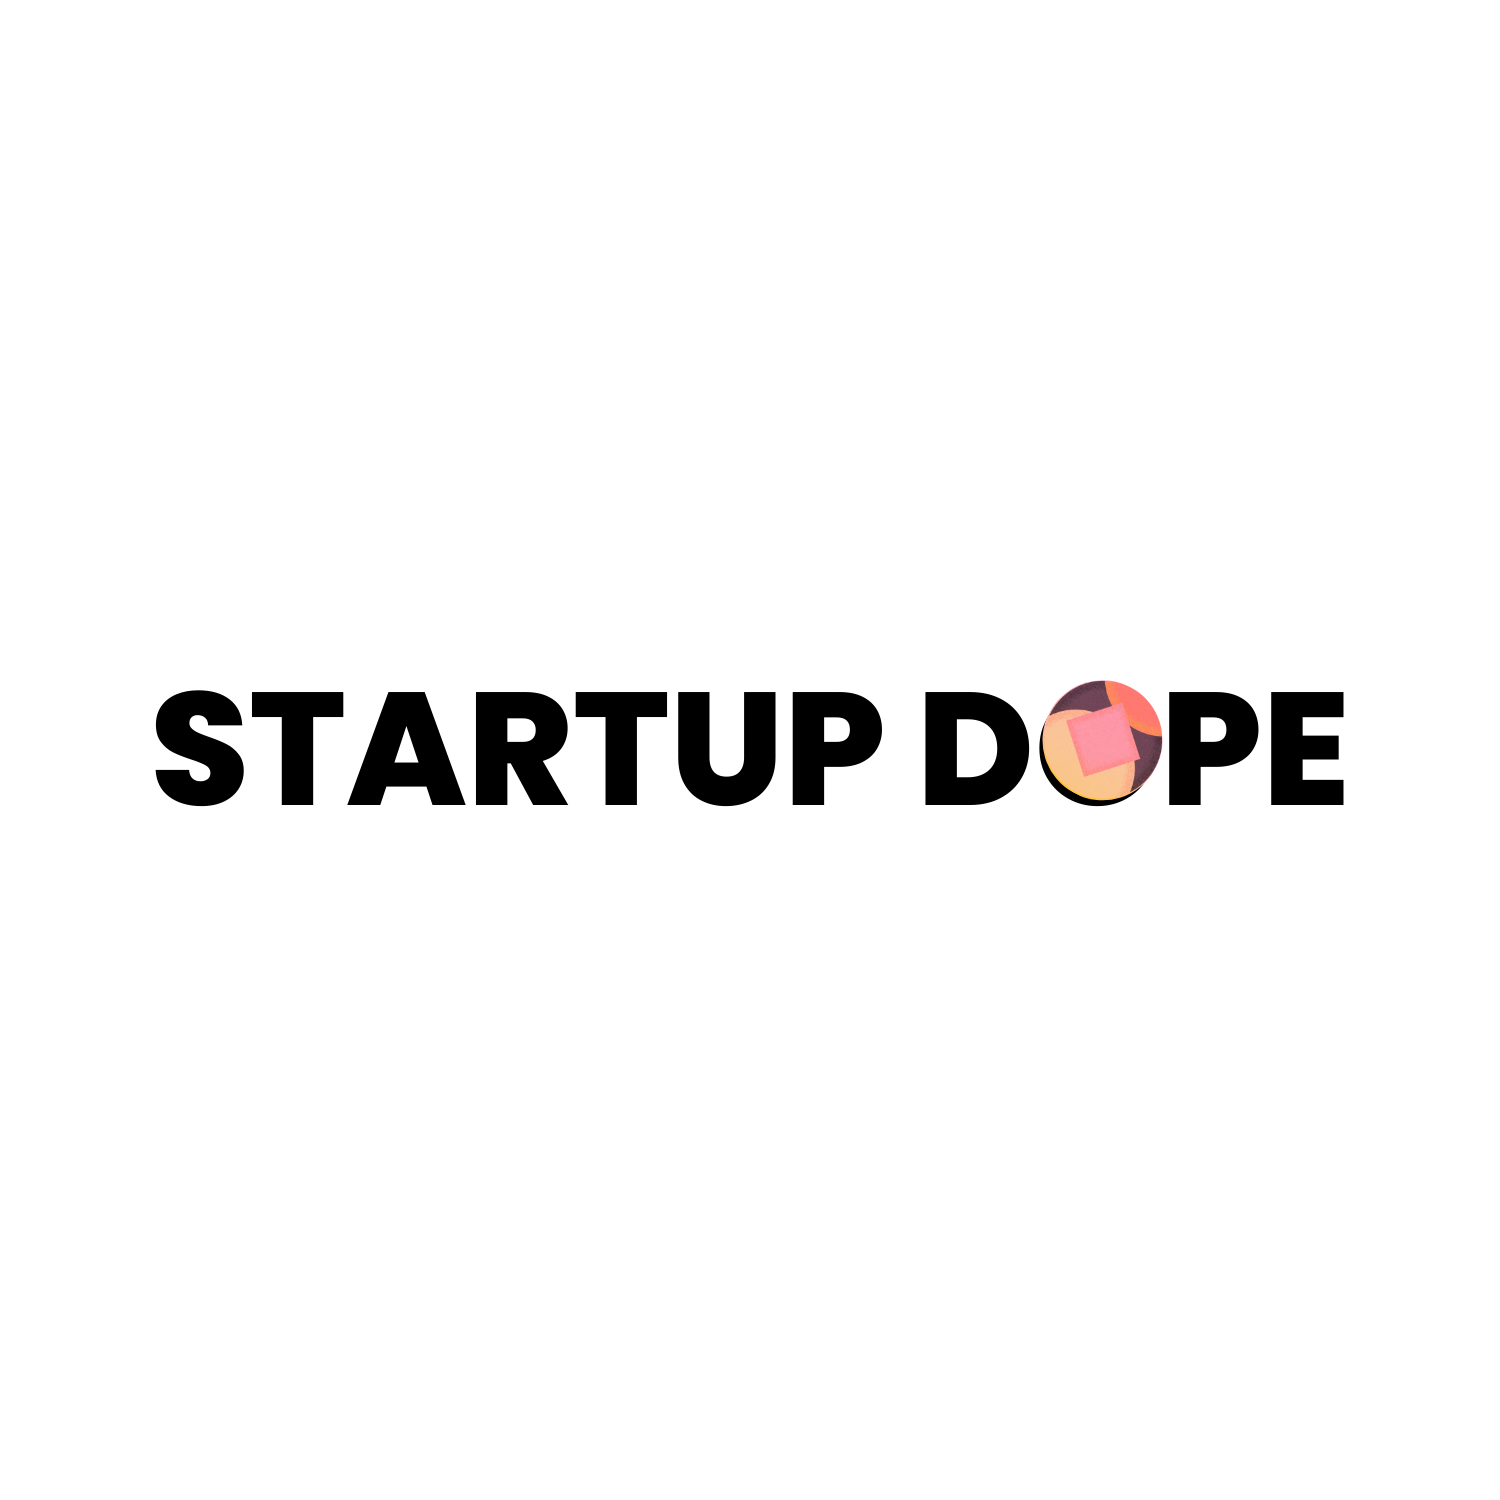 (c) Startupdope.com